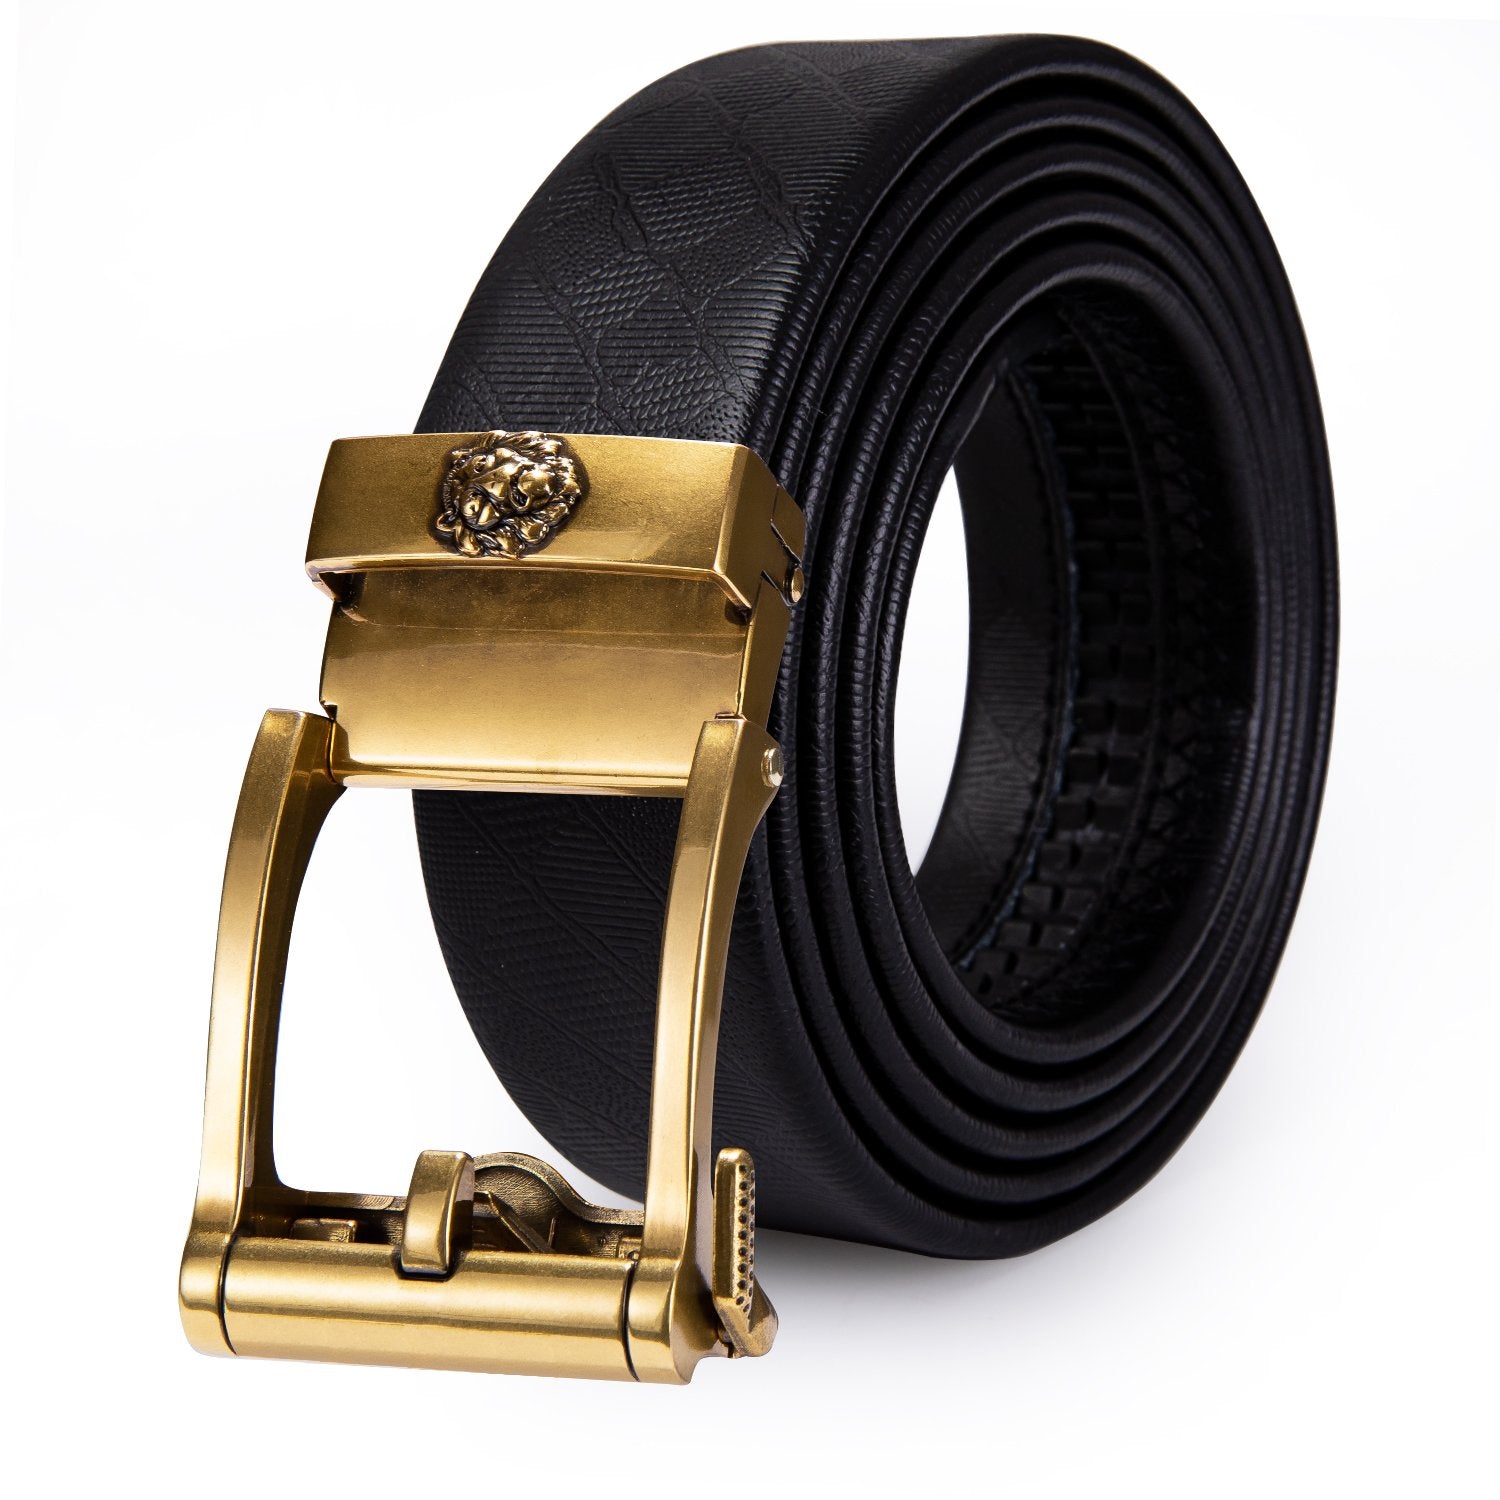 Barry.wang Men's Belt Golden Lion Metal Buckle Genuine Leather Belt